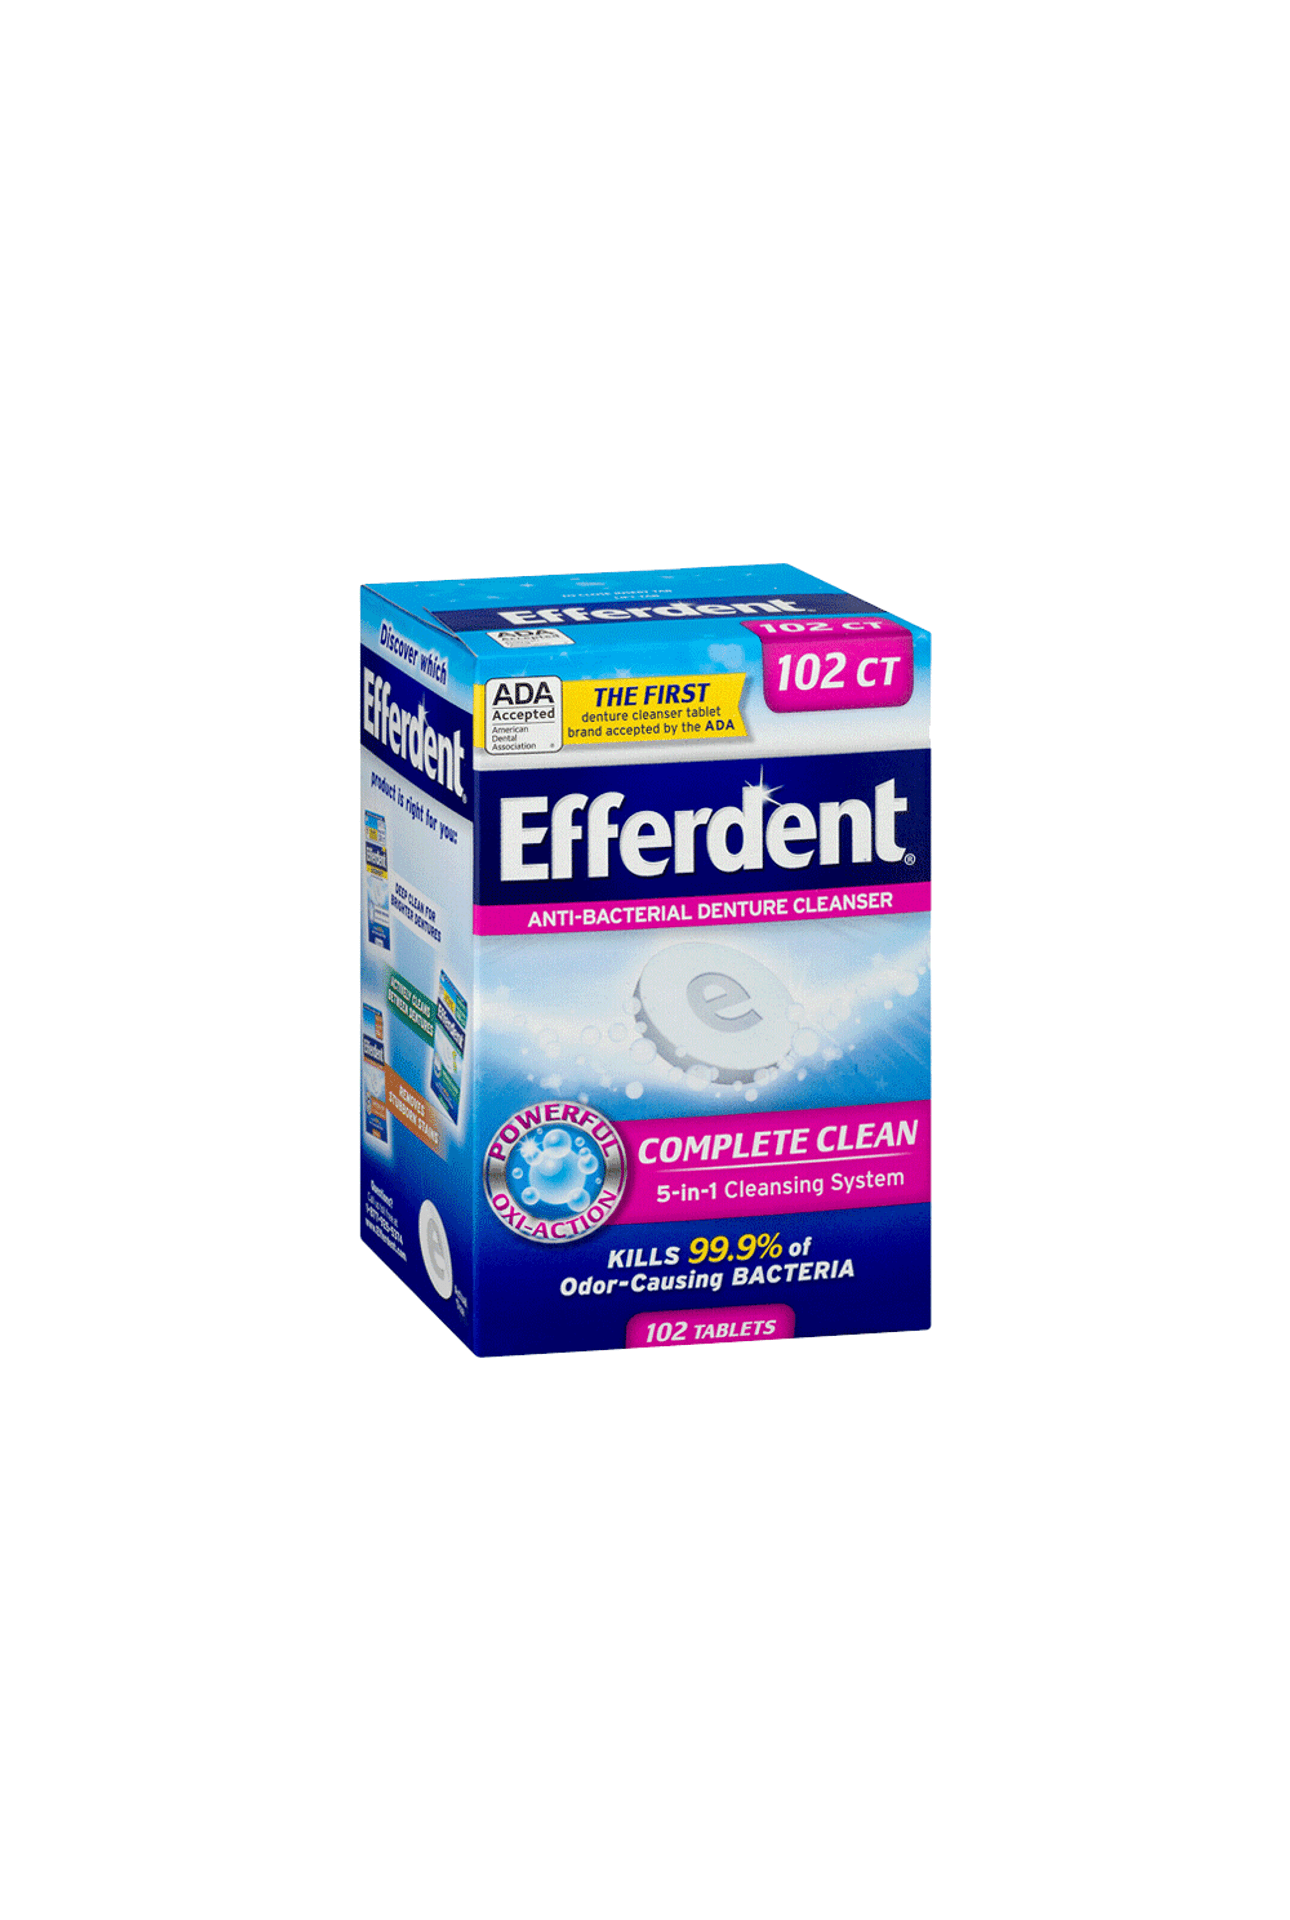 Efferdent-Tabletas-Limpiadoras-Efferdent-Original-x-102-unid-0814832015879_img1